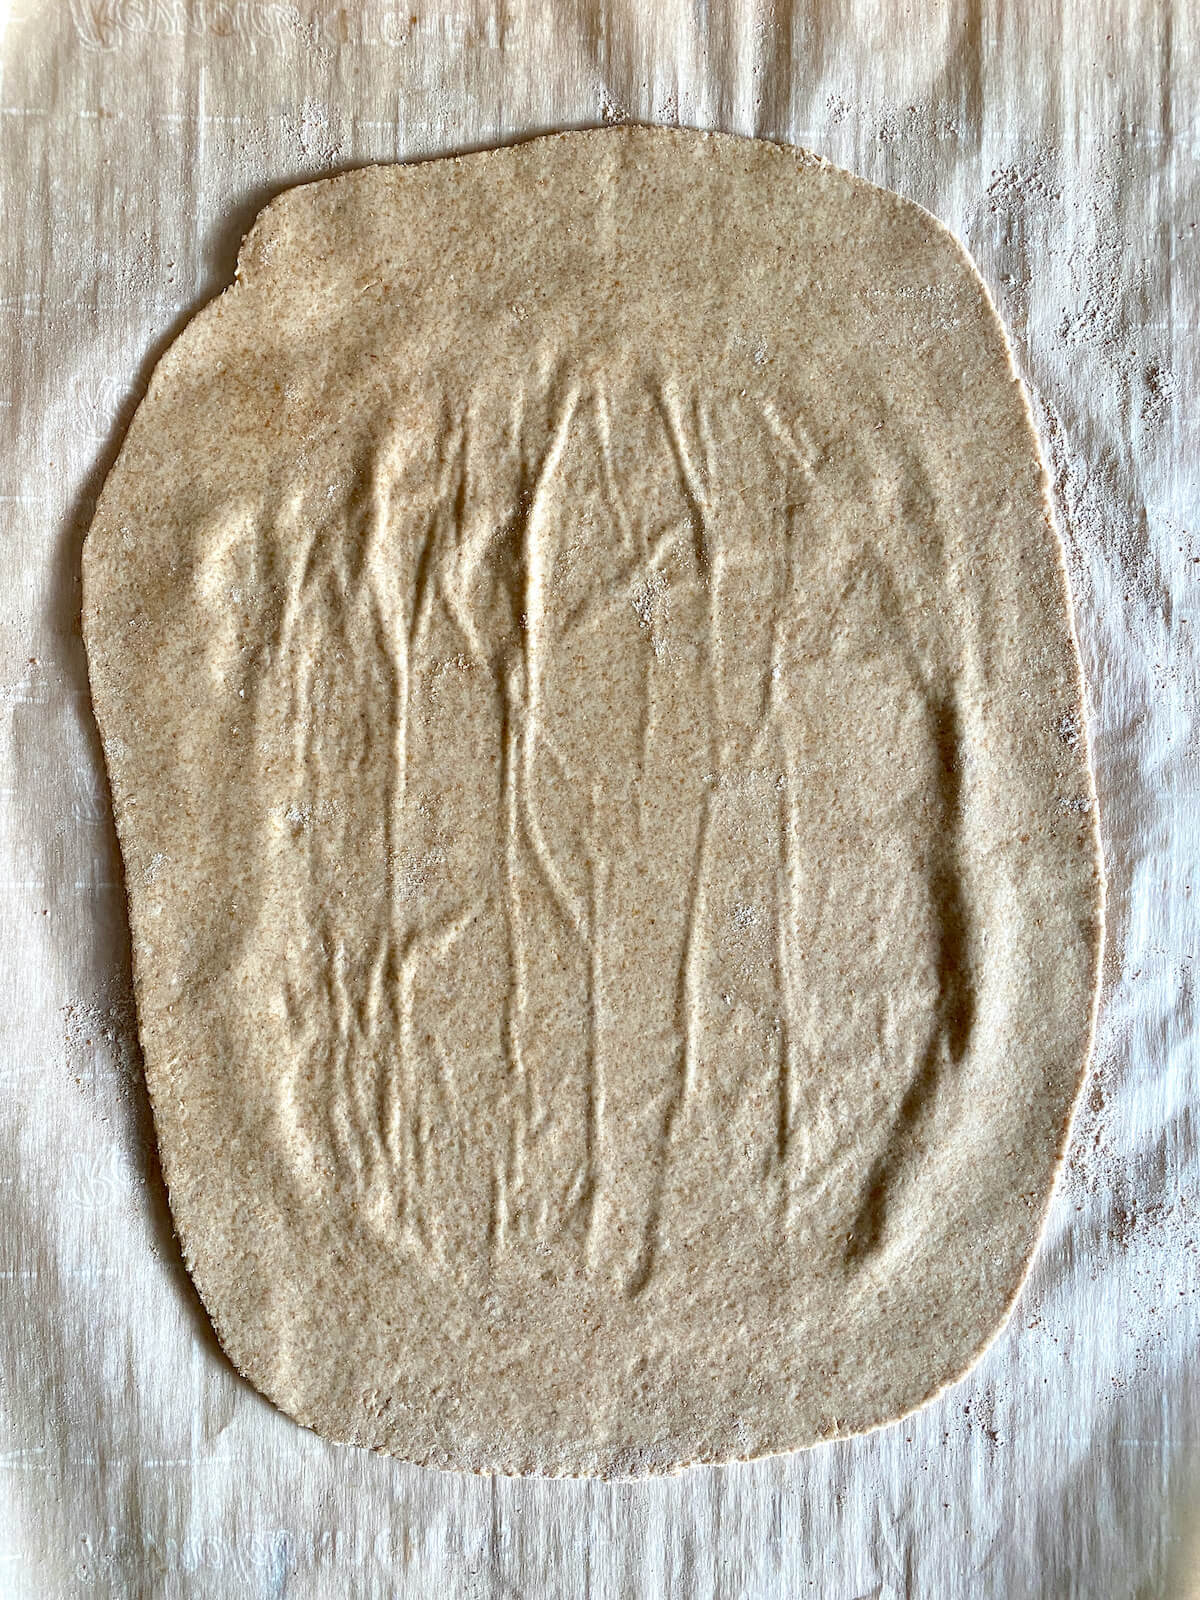 The sourdough cracker dough rolled out onto a piece of parchment paper.